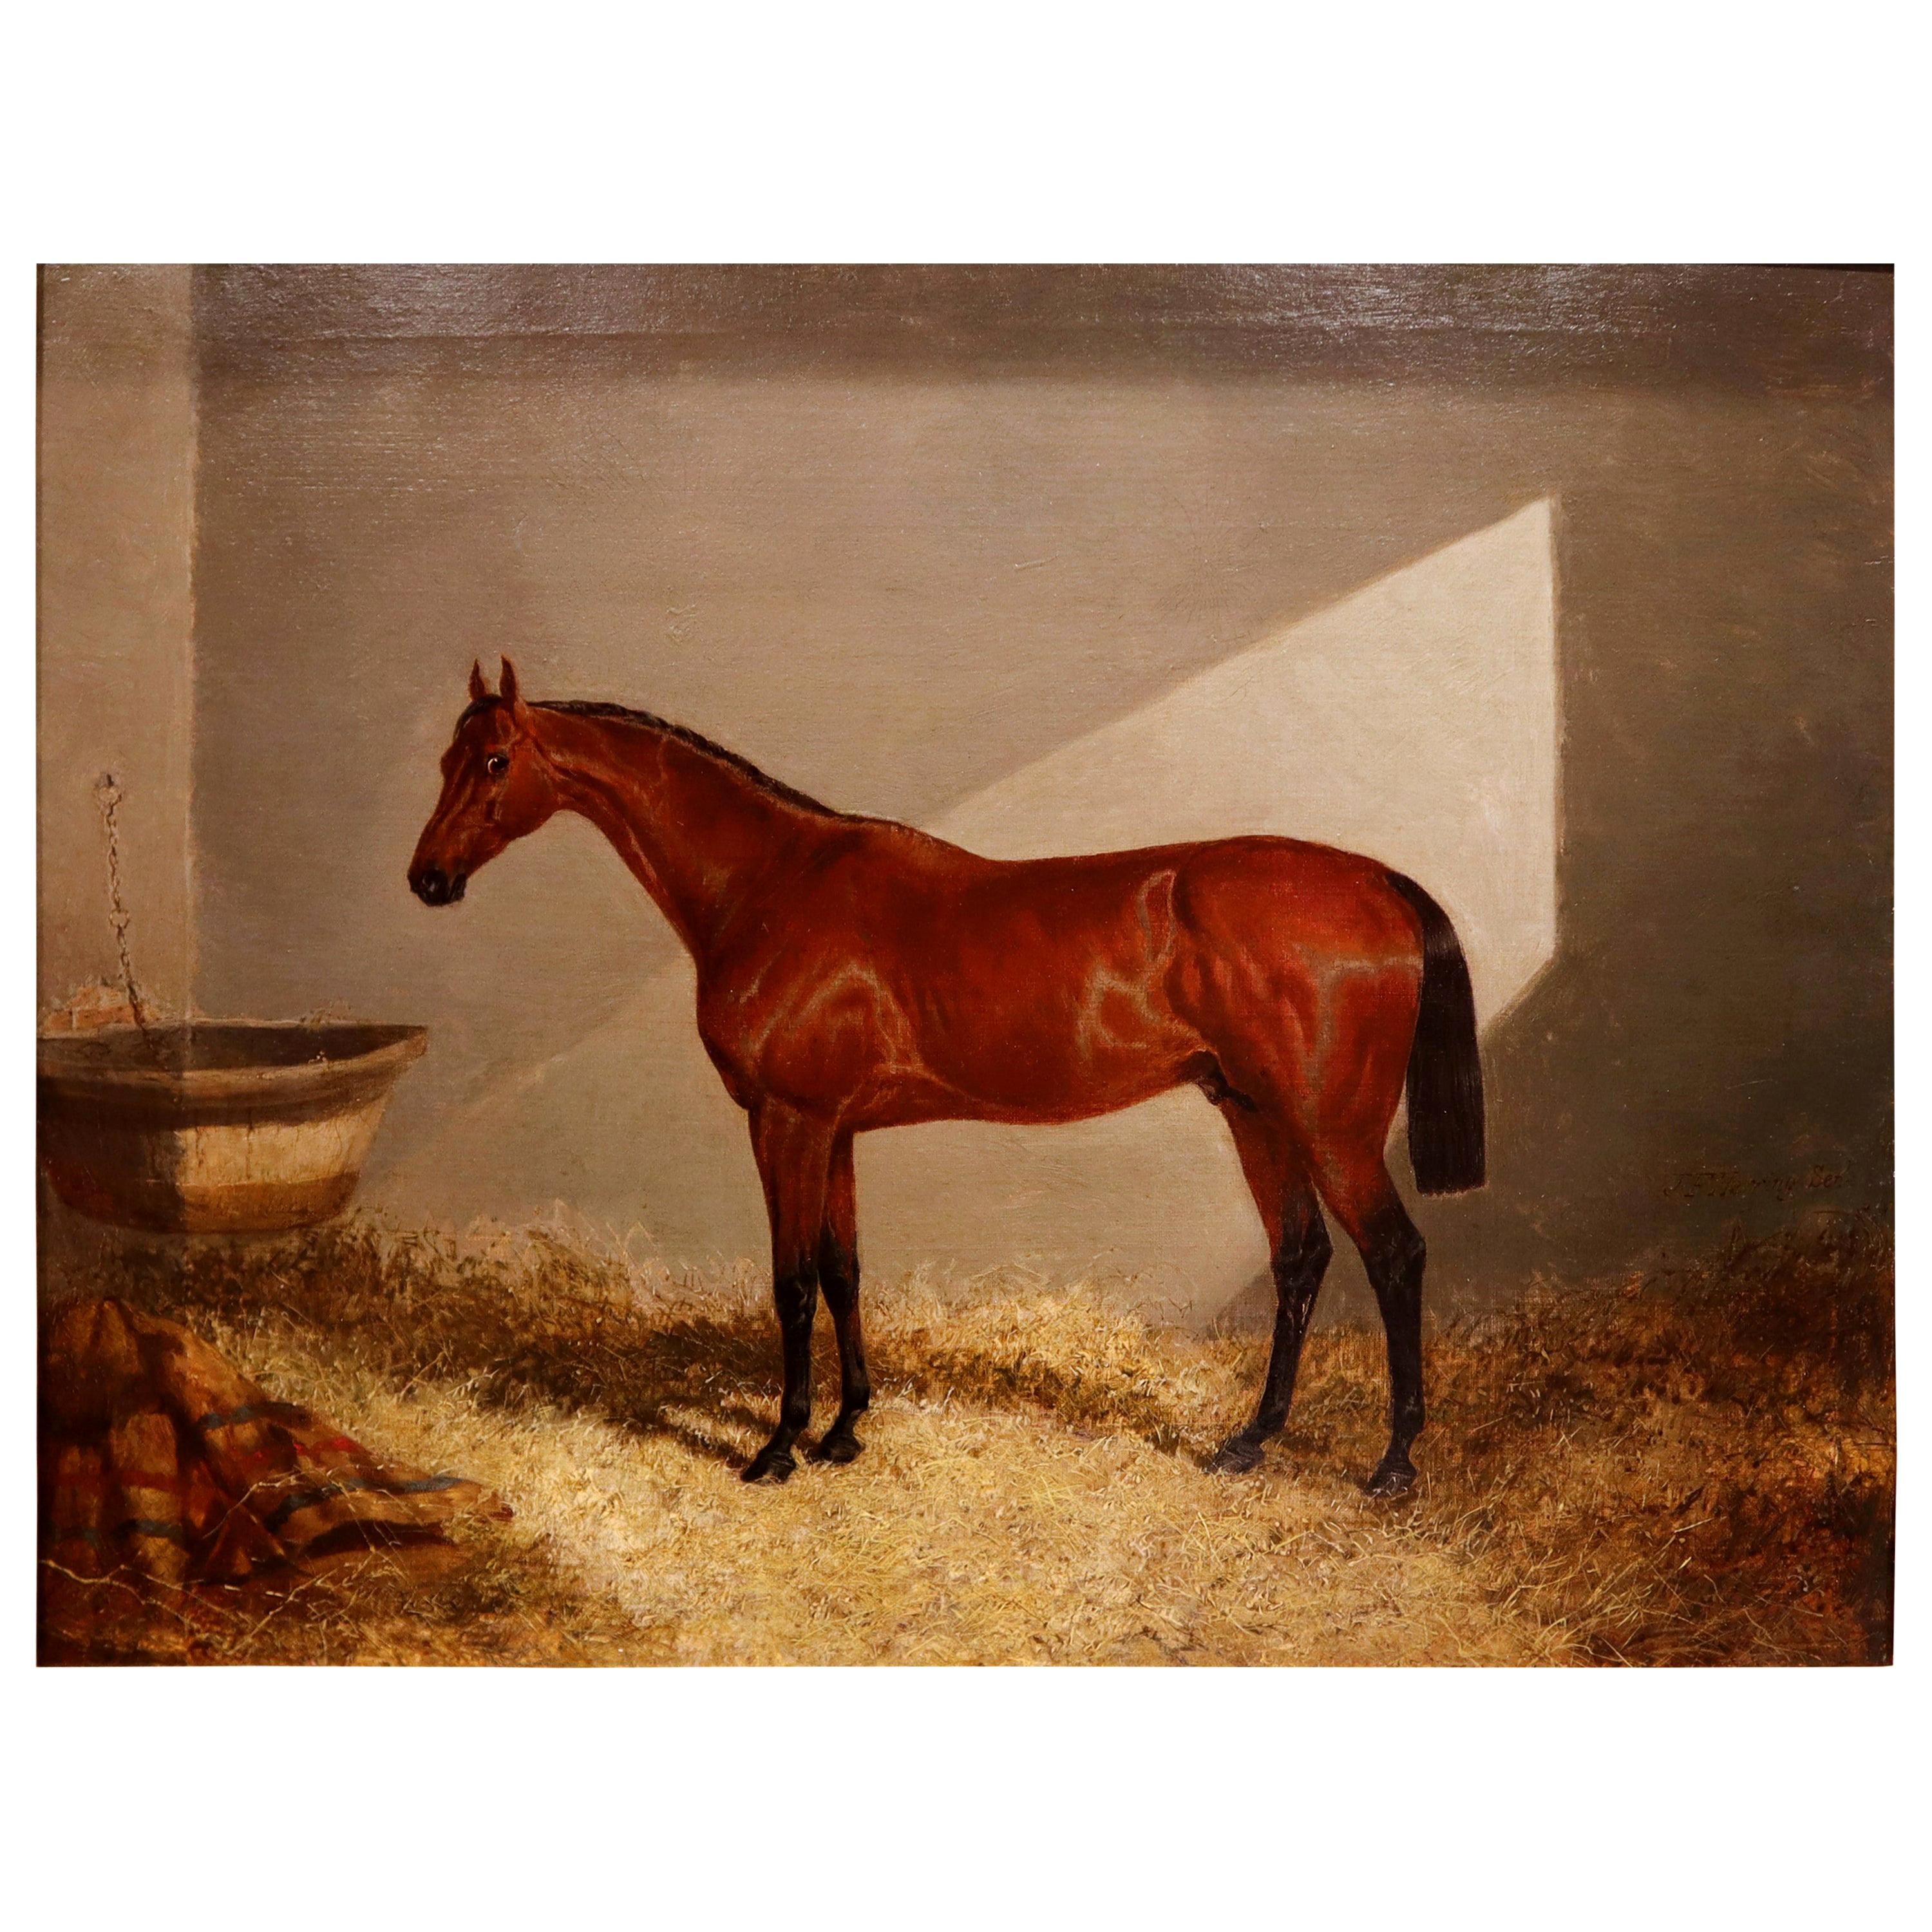 Bloomsbury, Winner of the Derby Oil on Canvas